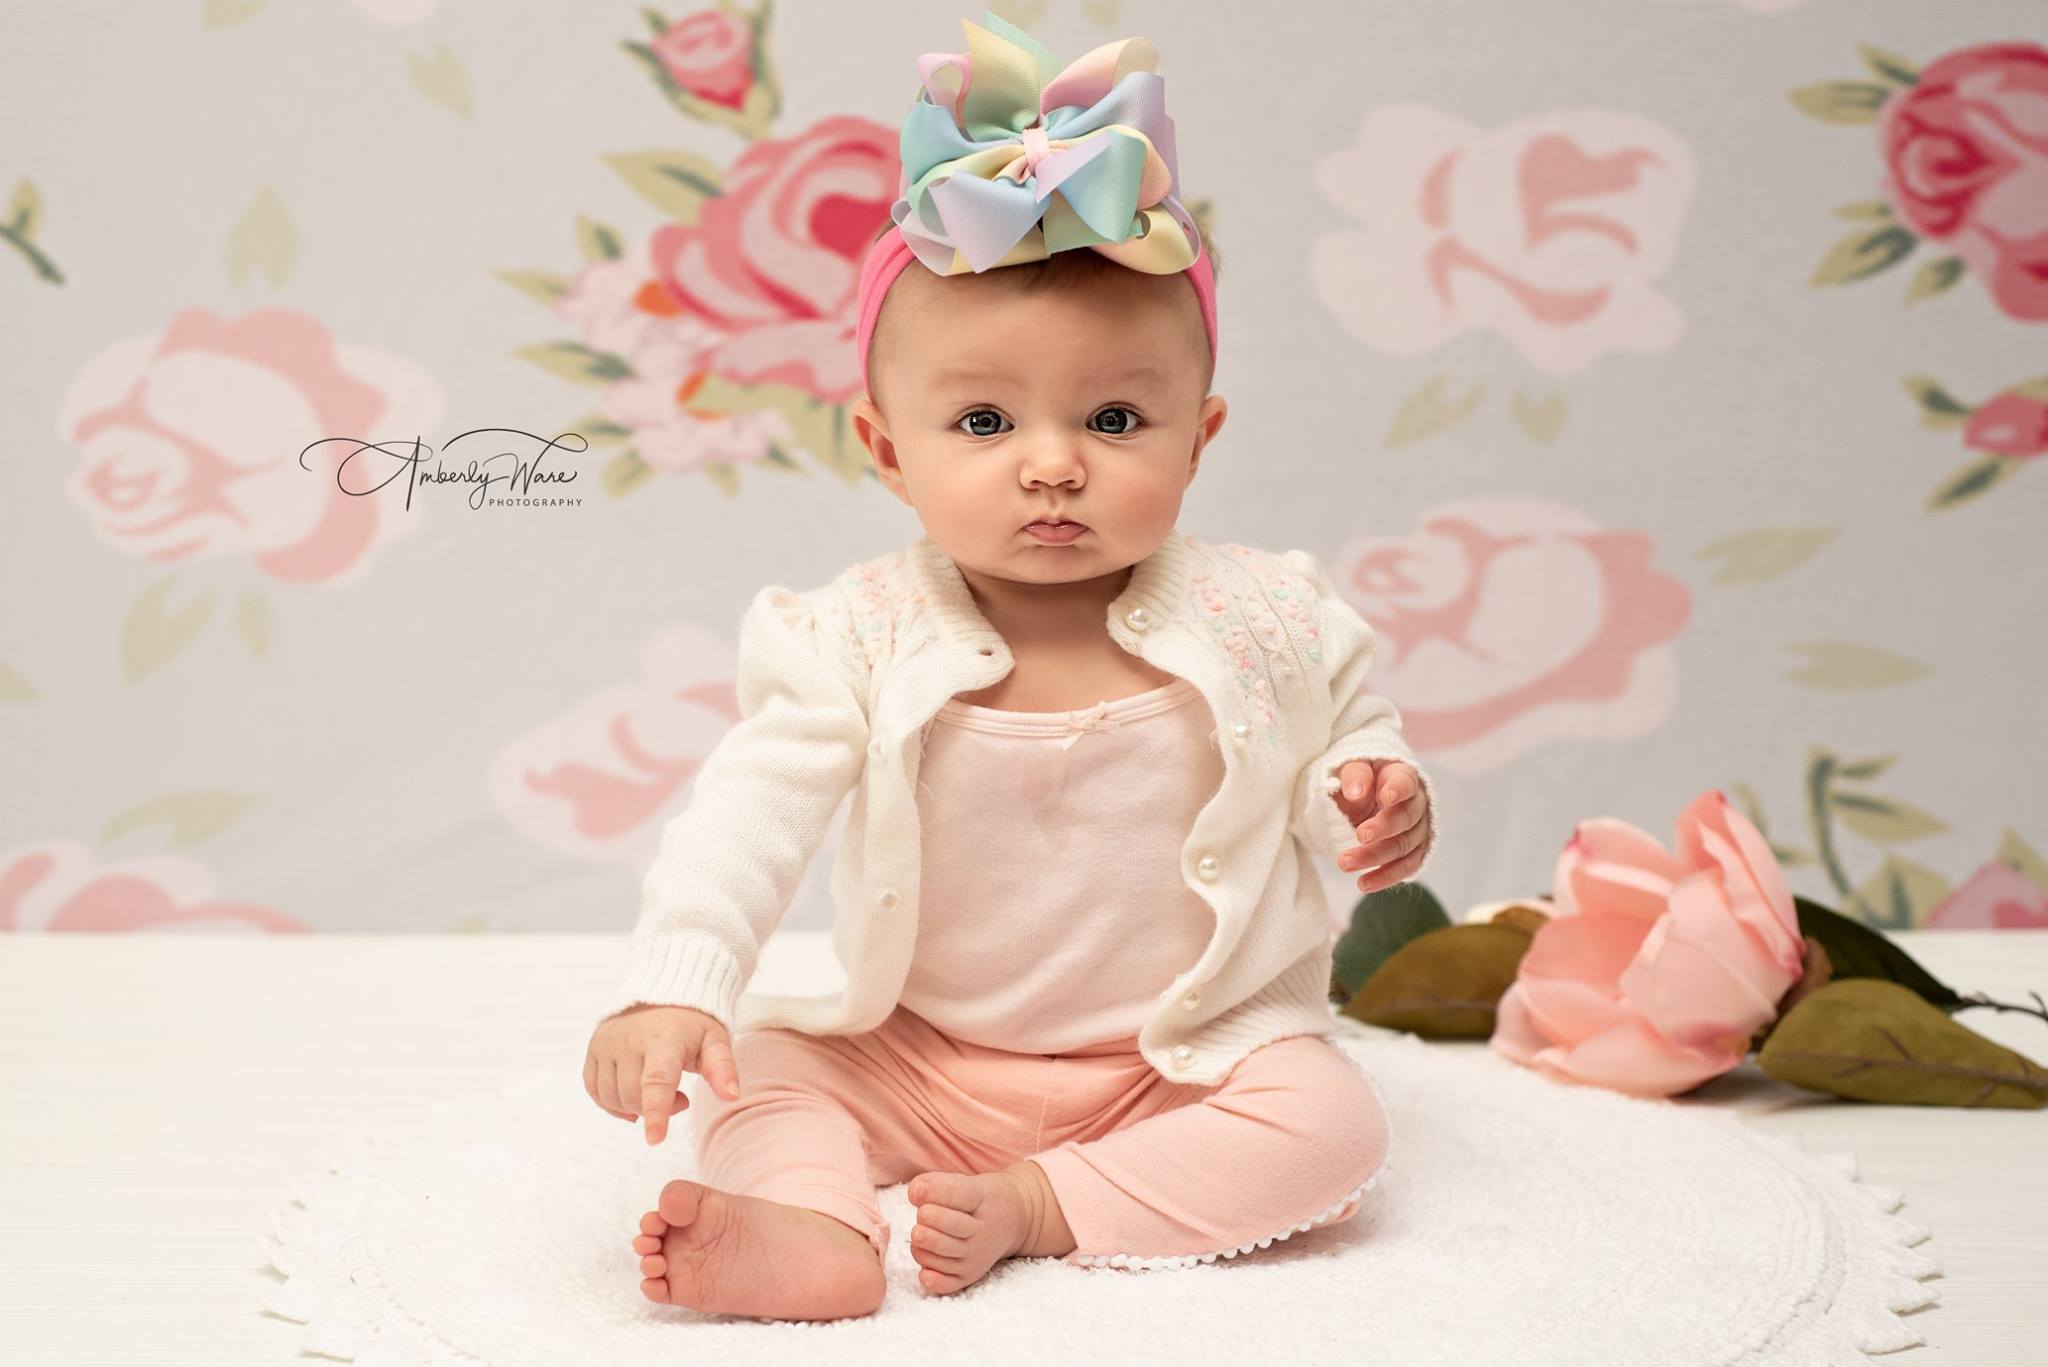 Kate Pink Florals White Background Pattern Baby Photography Backdrop - Katebackdrop